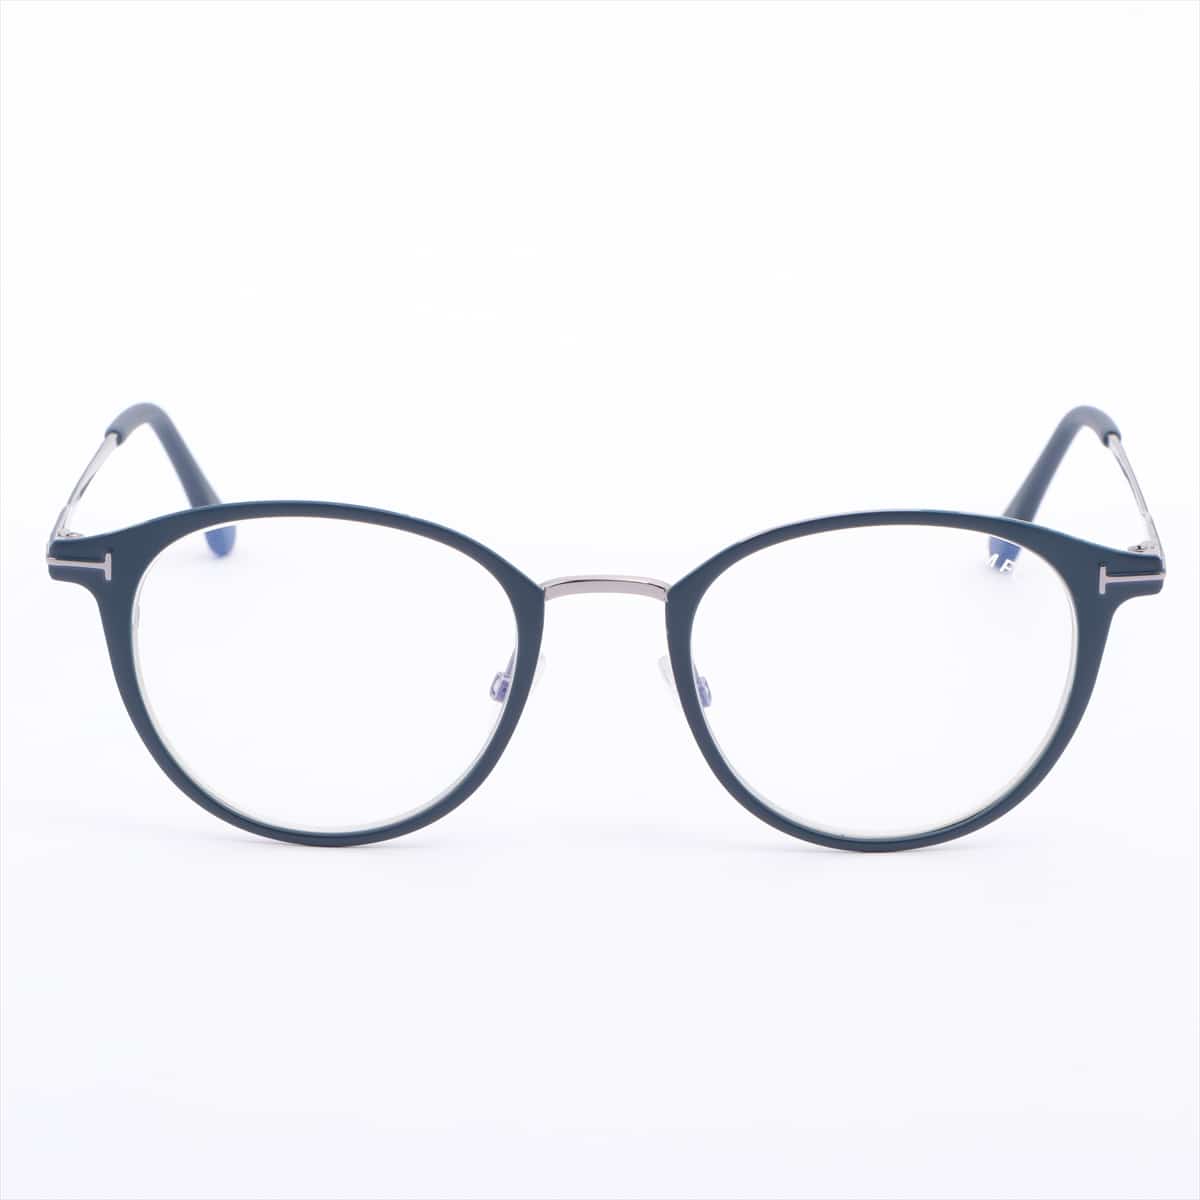 Tom Ford Glasses Plastic